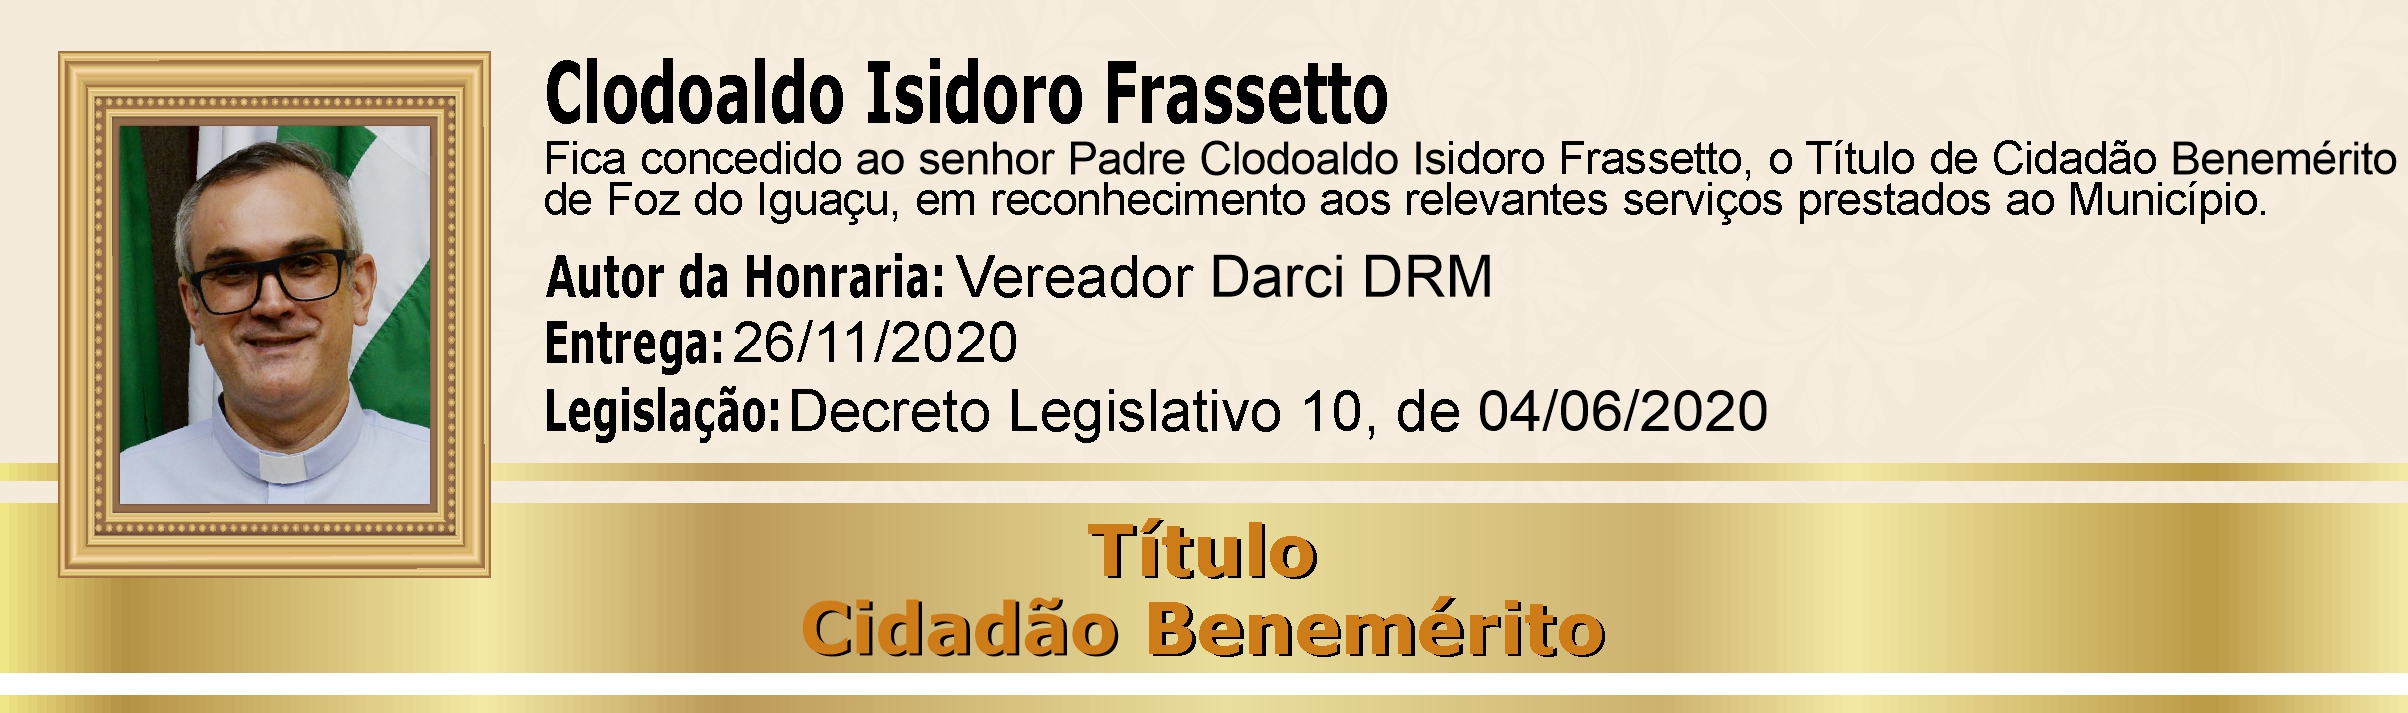 Clodoaldo Isidoro Frassetto